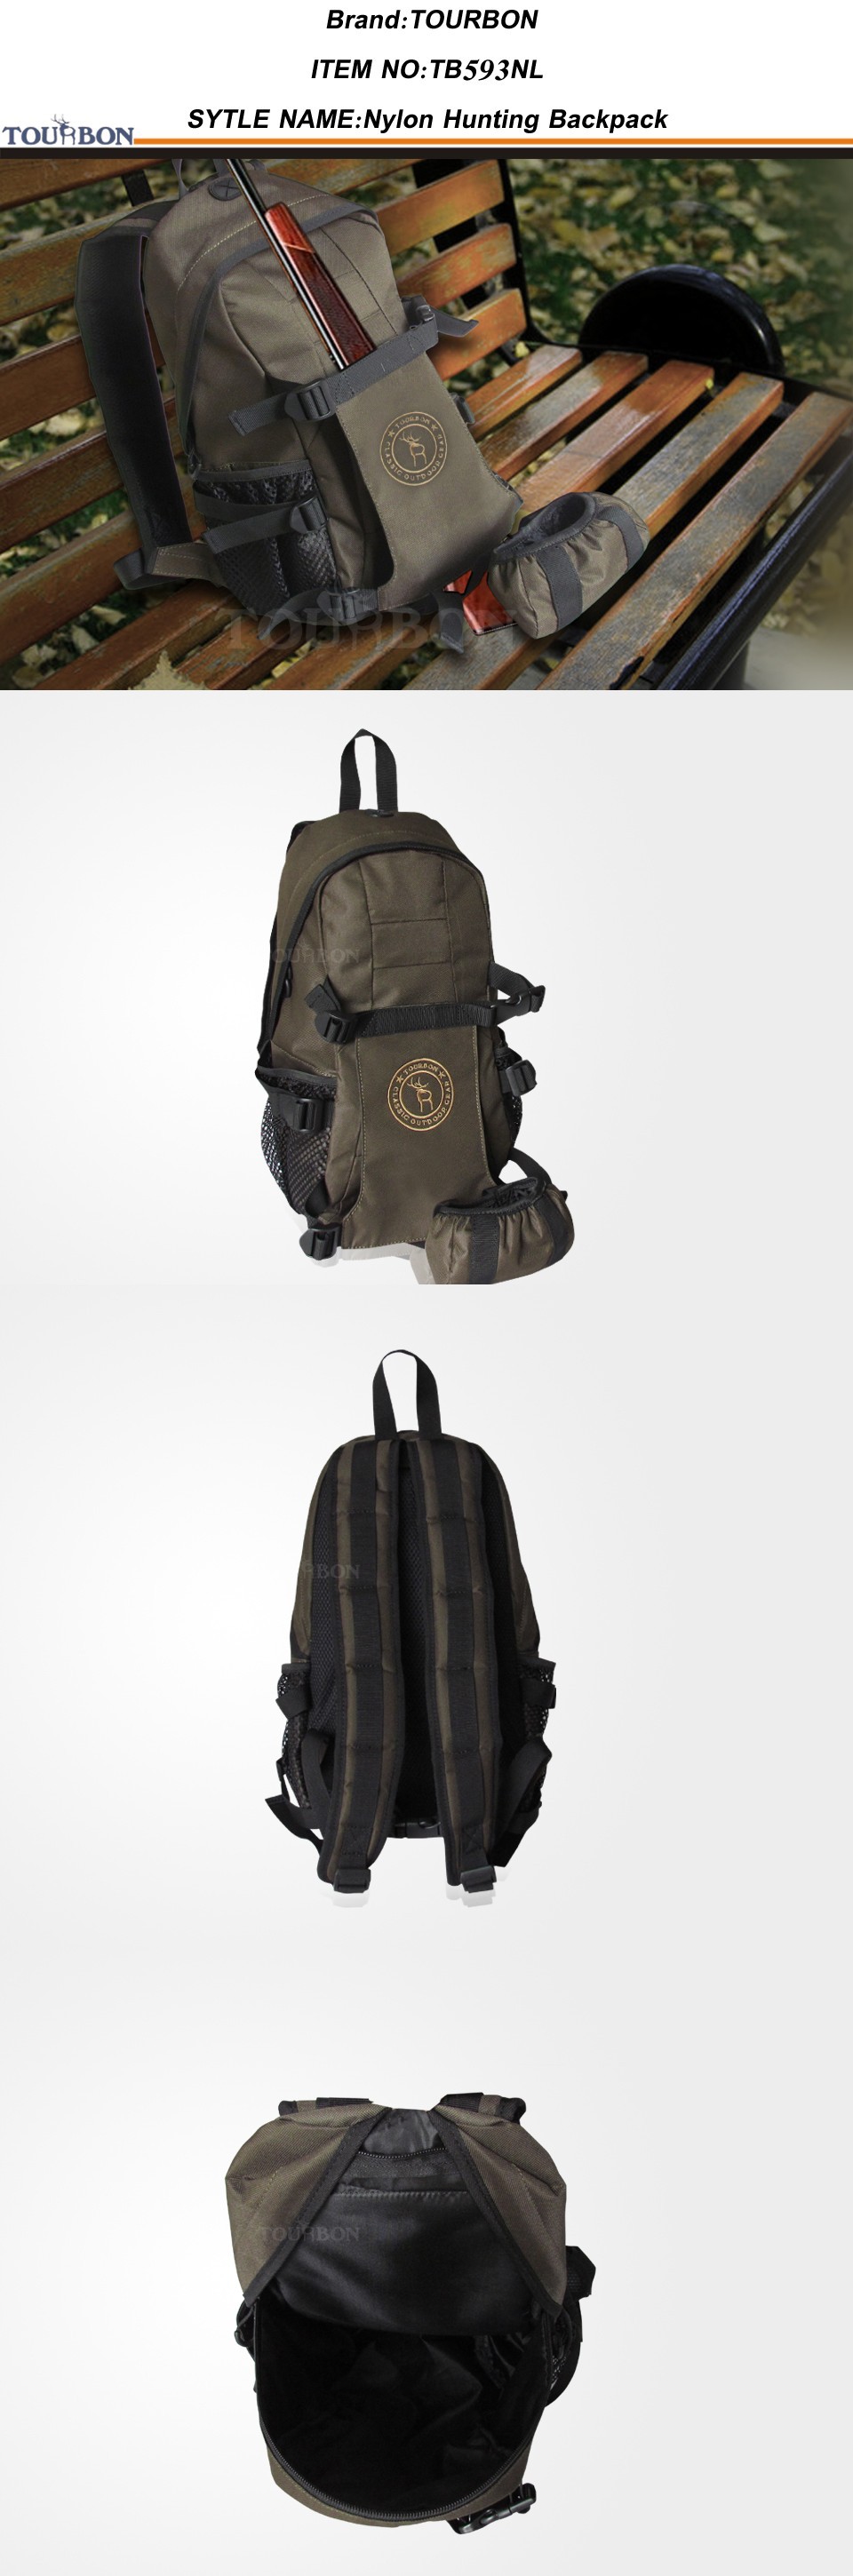 TB593 hunting backpack